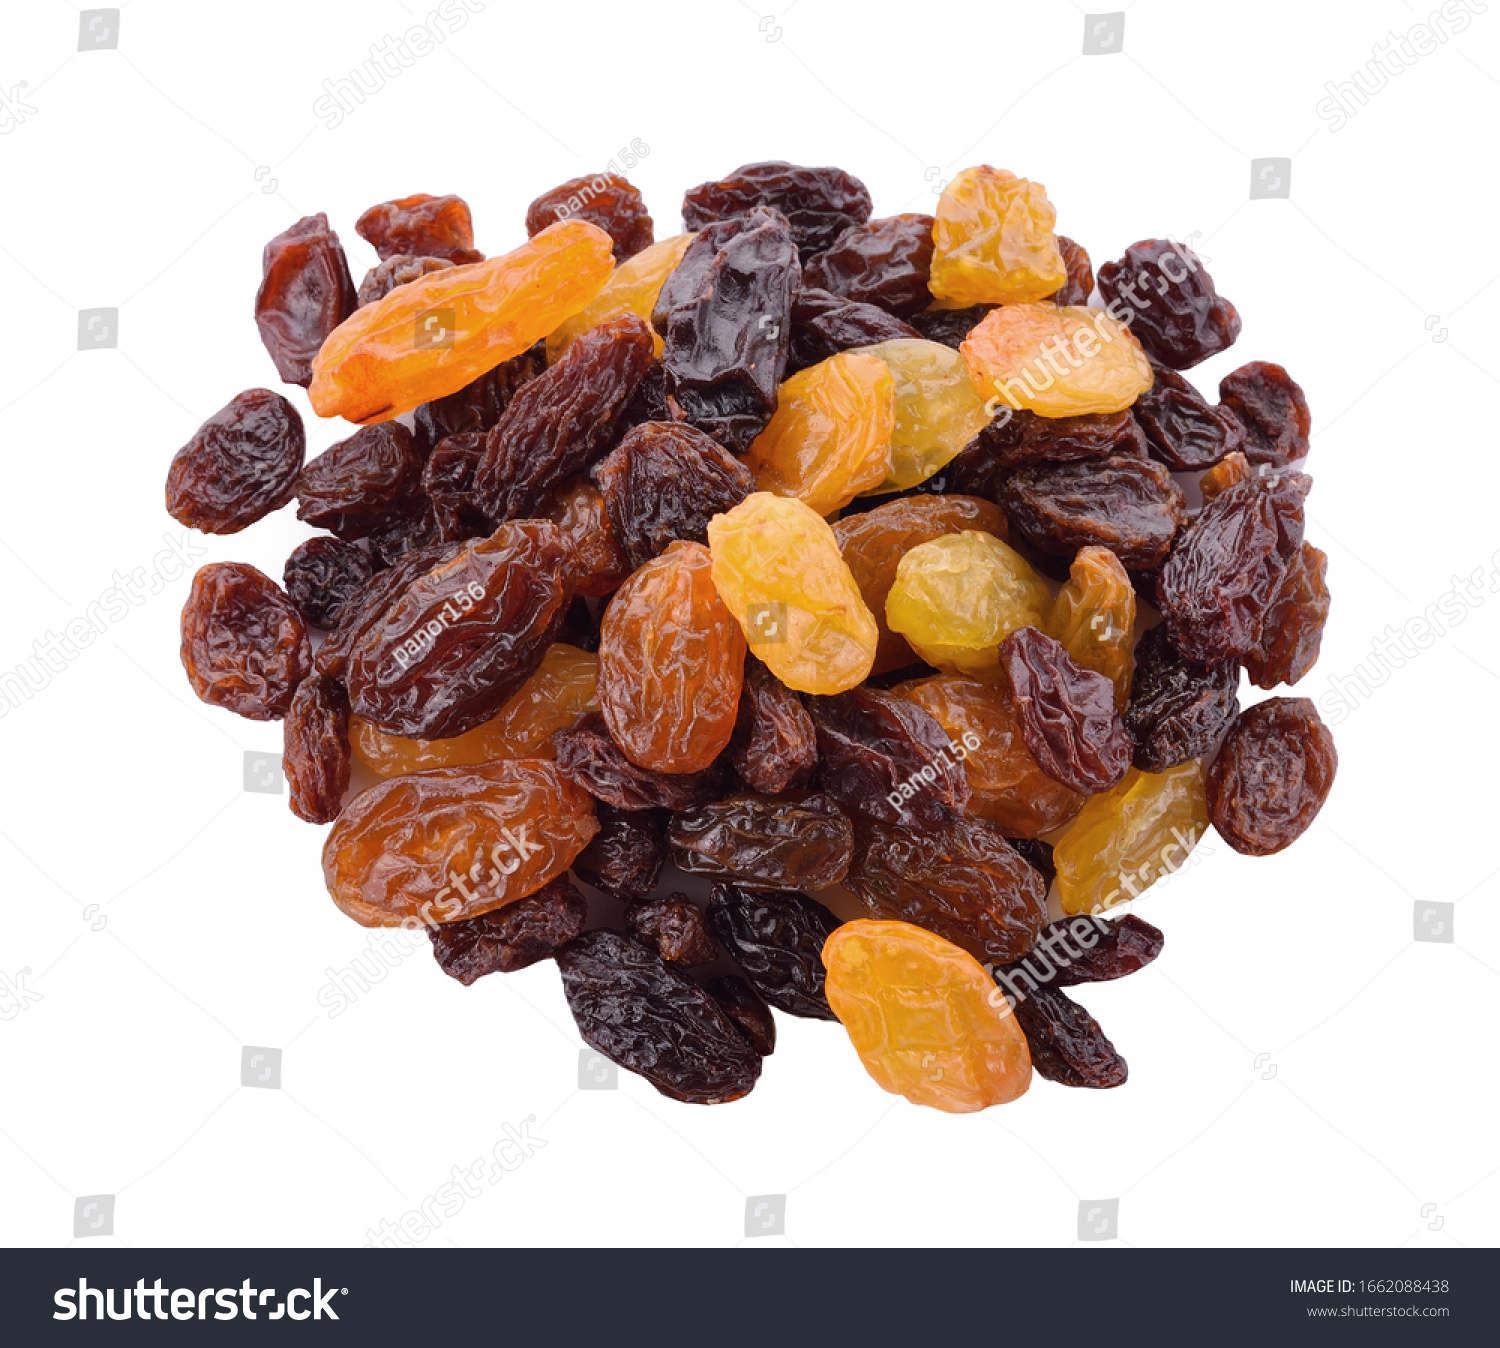 Raisins isolated on a white background #1662088438